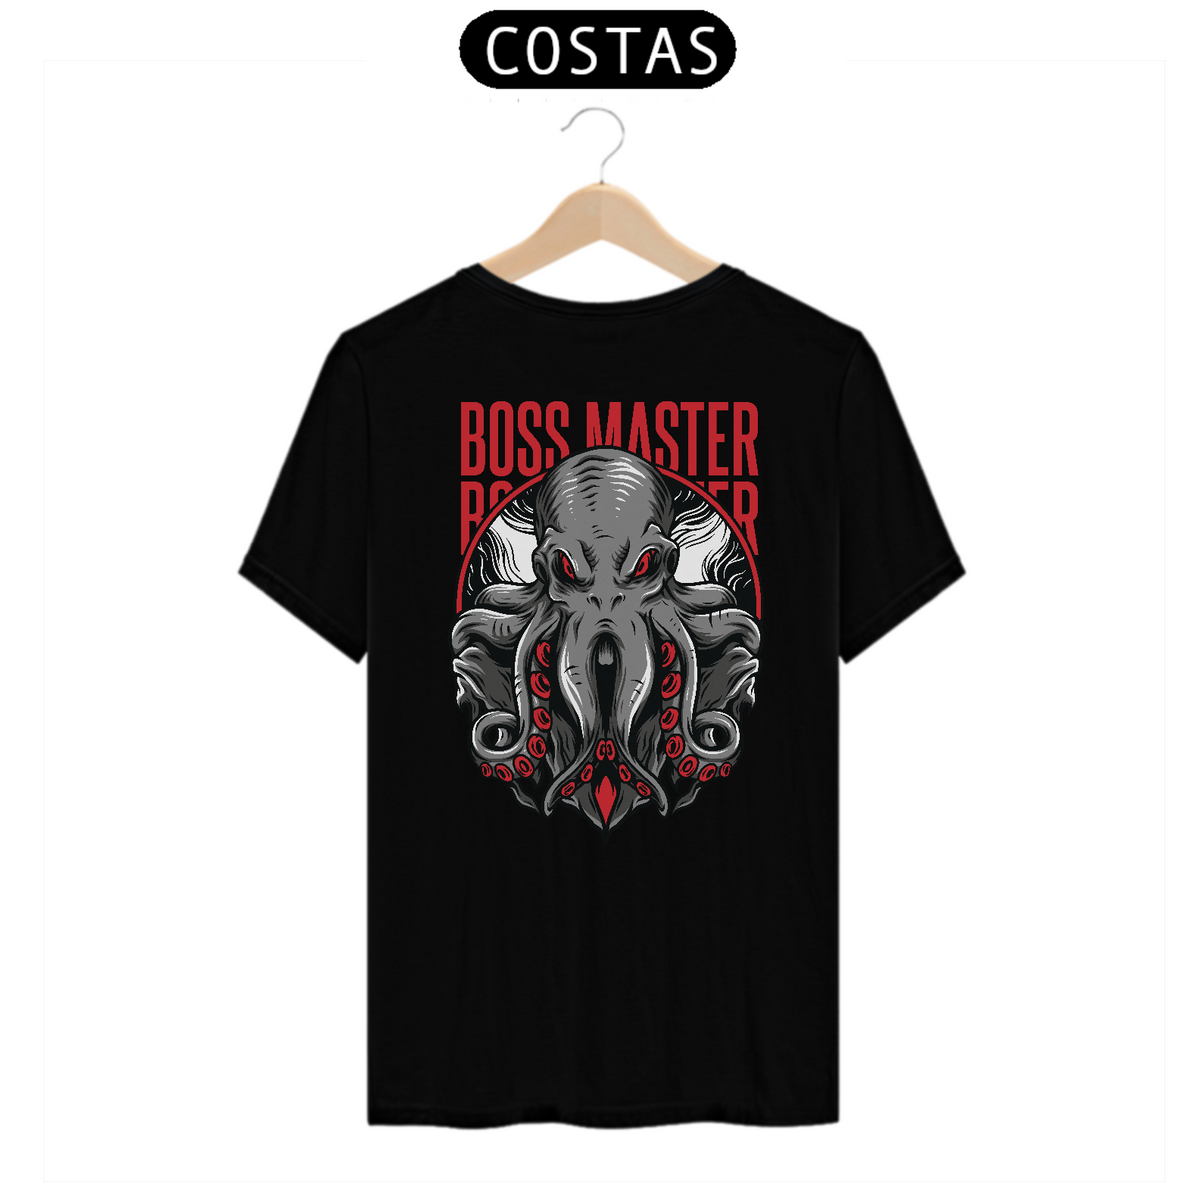 Nome do produto: Camiseta Boss Master